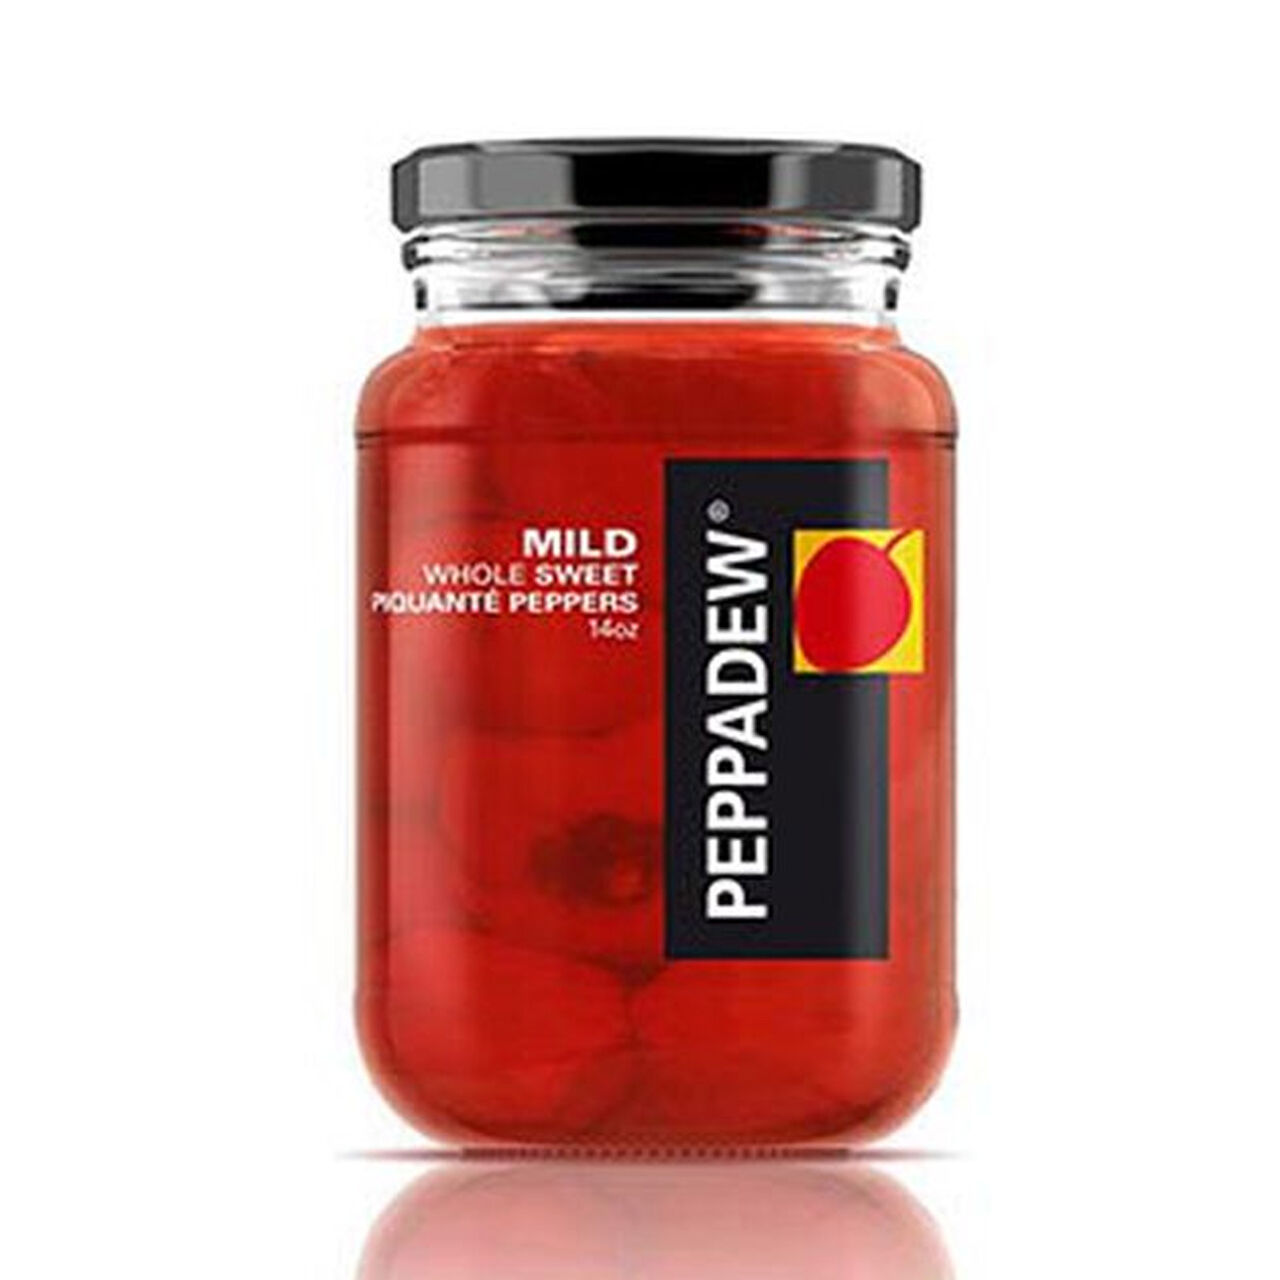 Peppadew Mild Whole Sweet Piquante Peppers - 14 oz (Kosher), , large image number 0